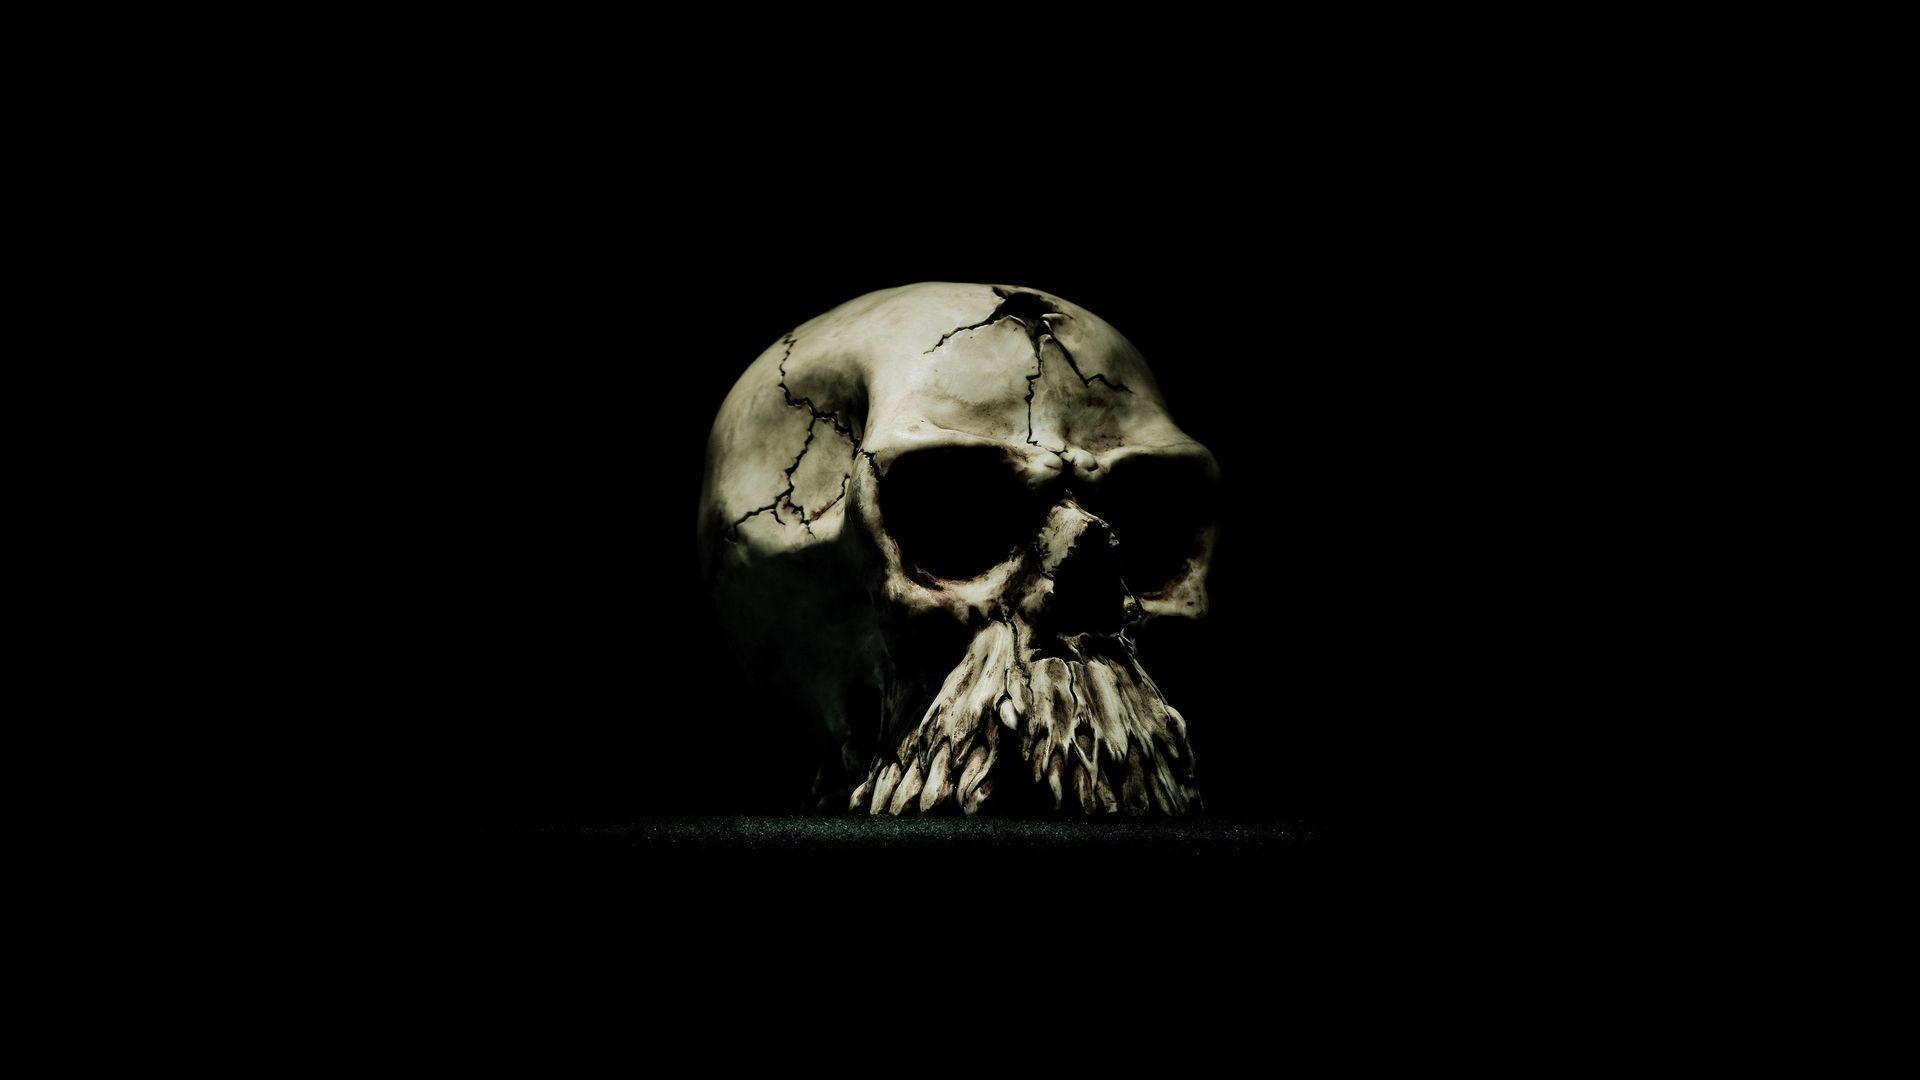 Skull Wallpaper for PC. Full HD Picture